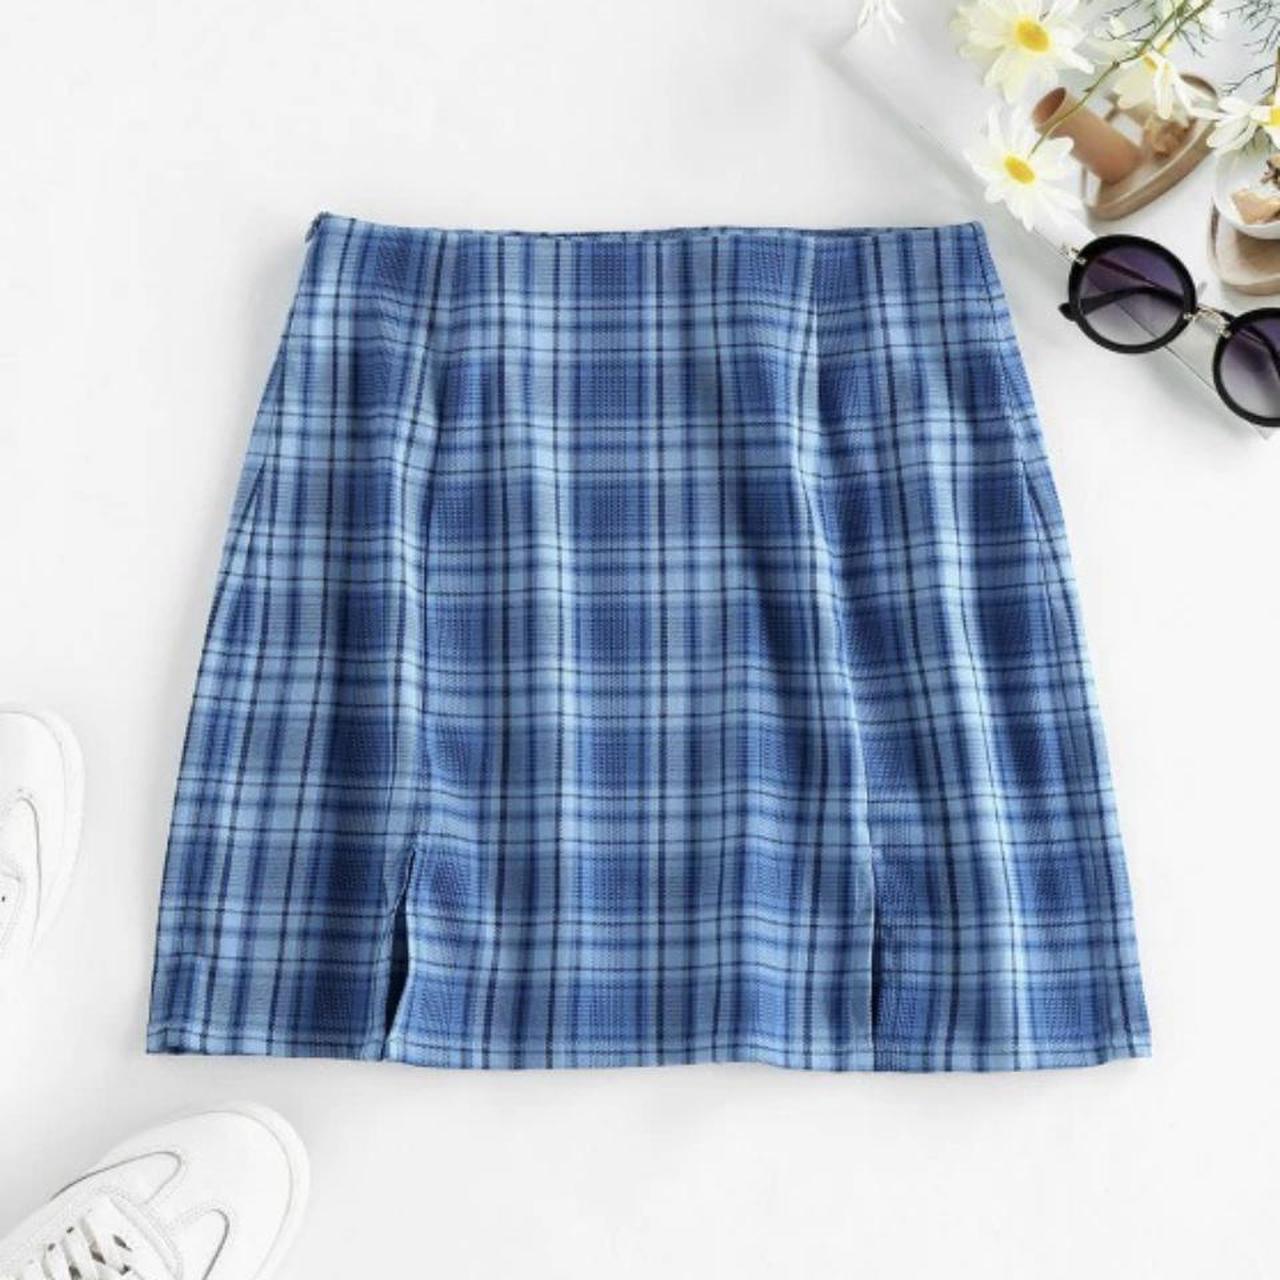 ZAFUL Women's Blue and Navy Skirt (4)